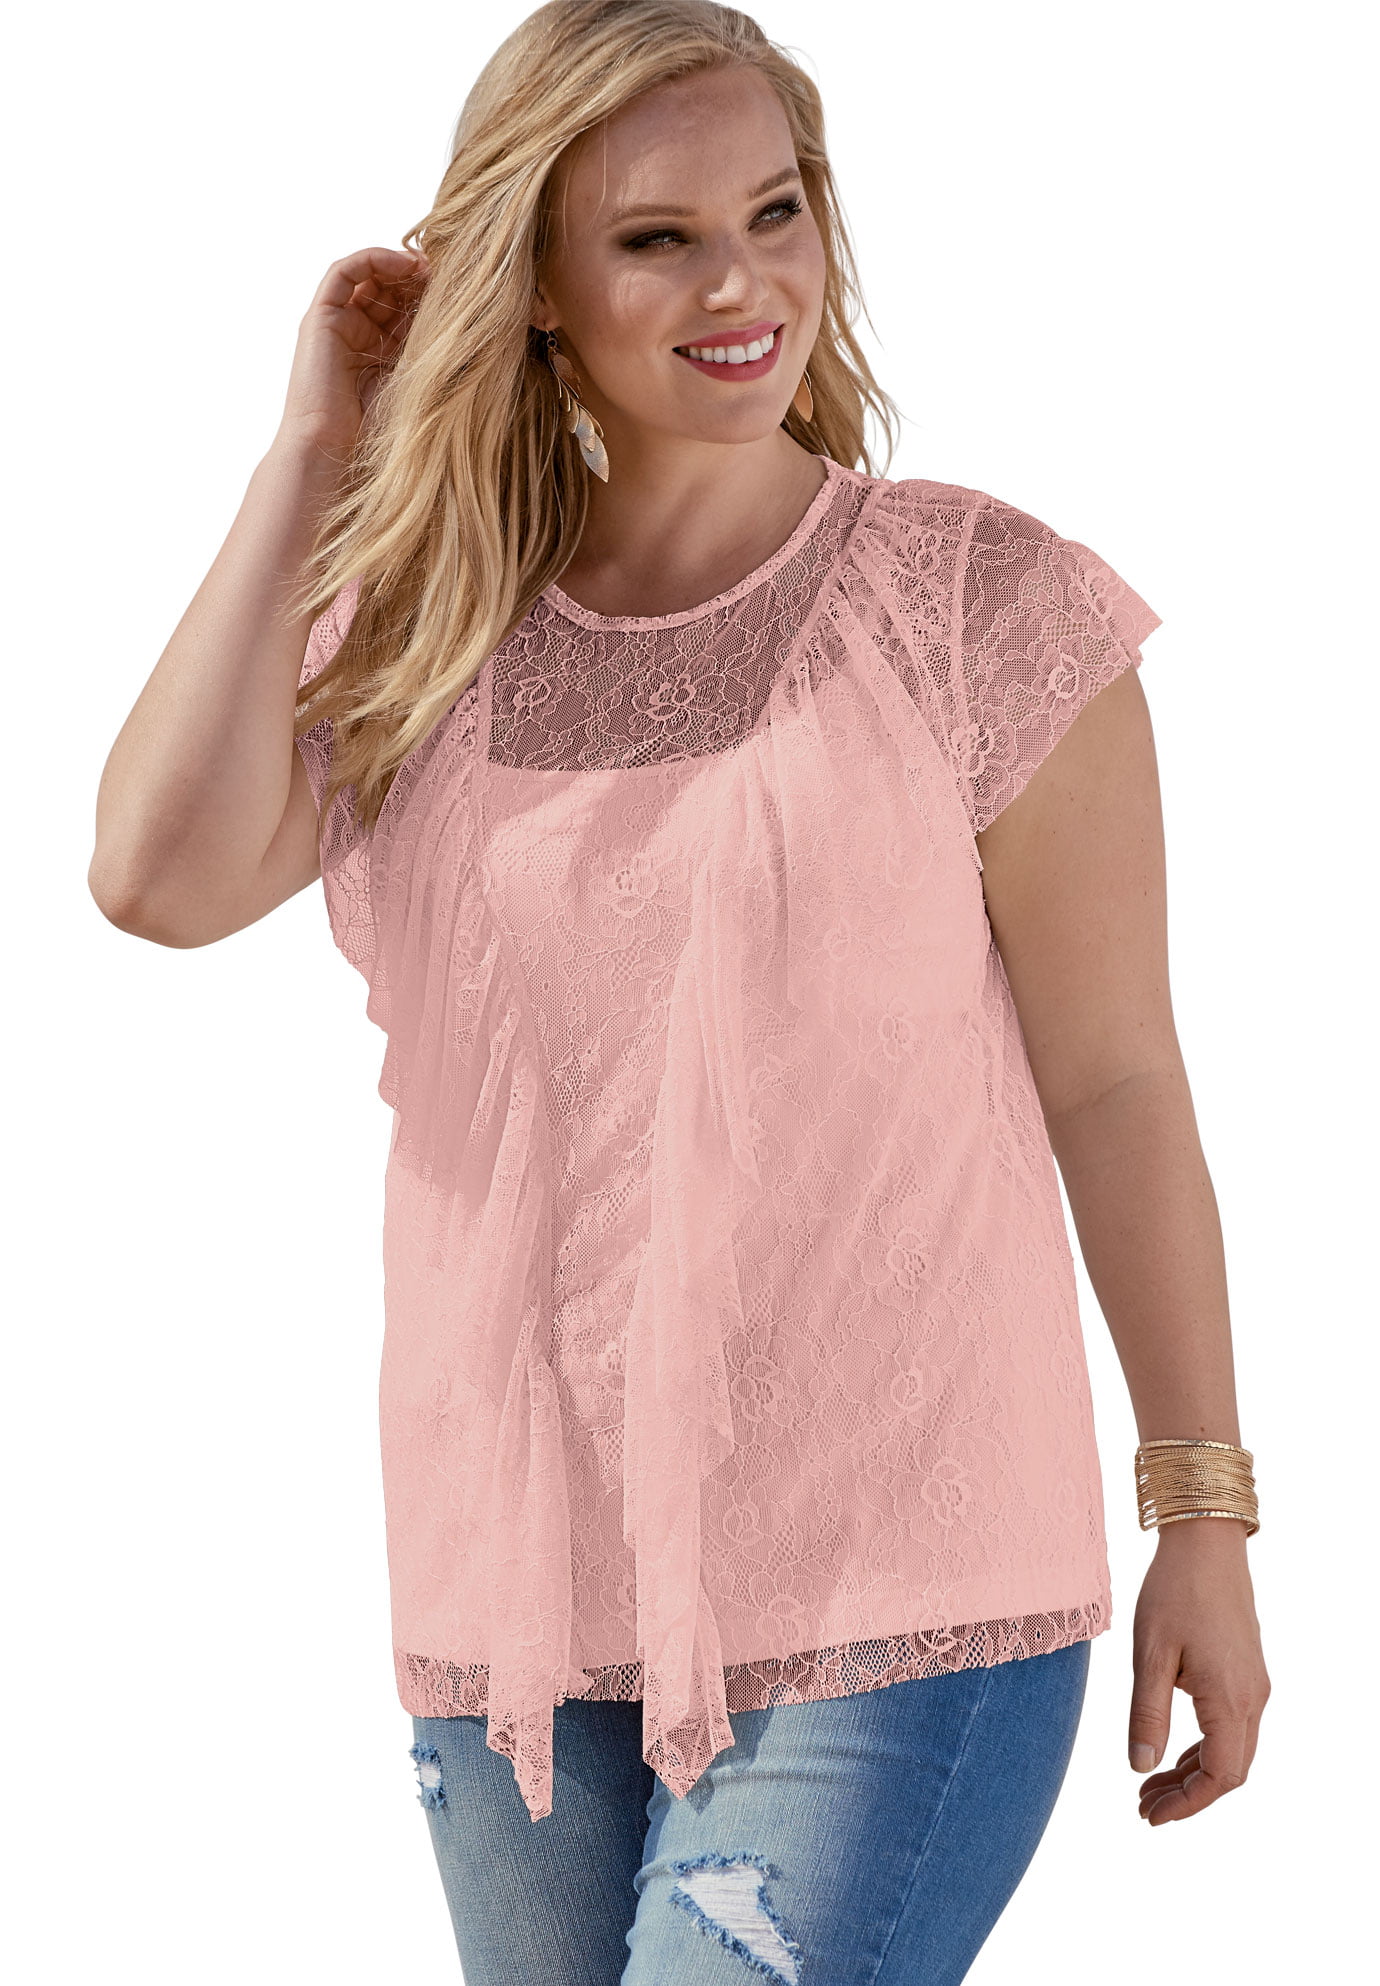 kompromis solid knus Roaman's Women's Plus Size Ruffle Lace Tee Shirt - Walmart.com